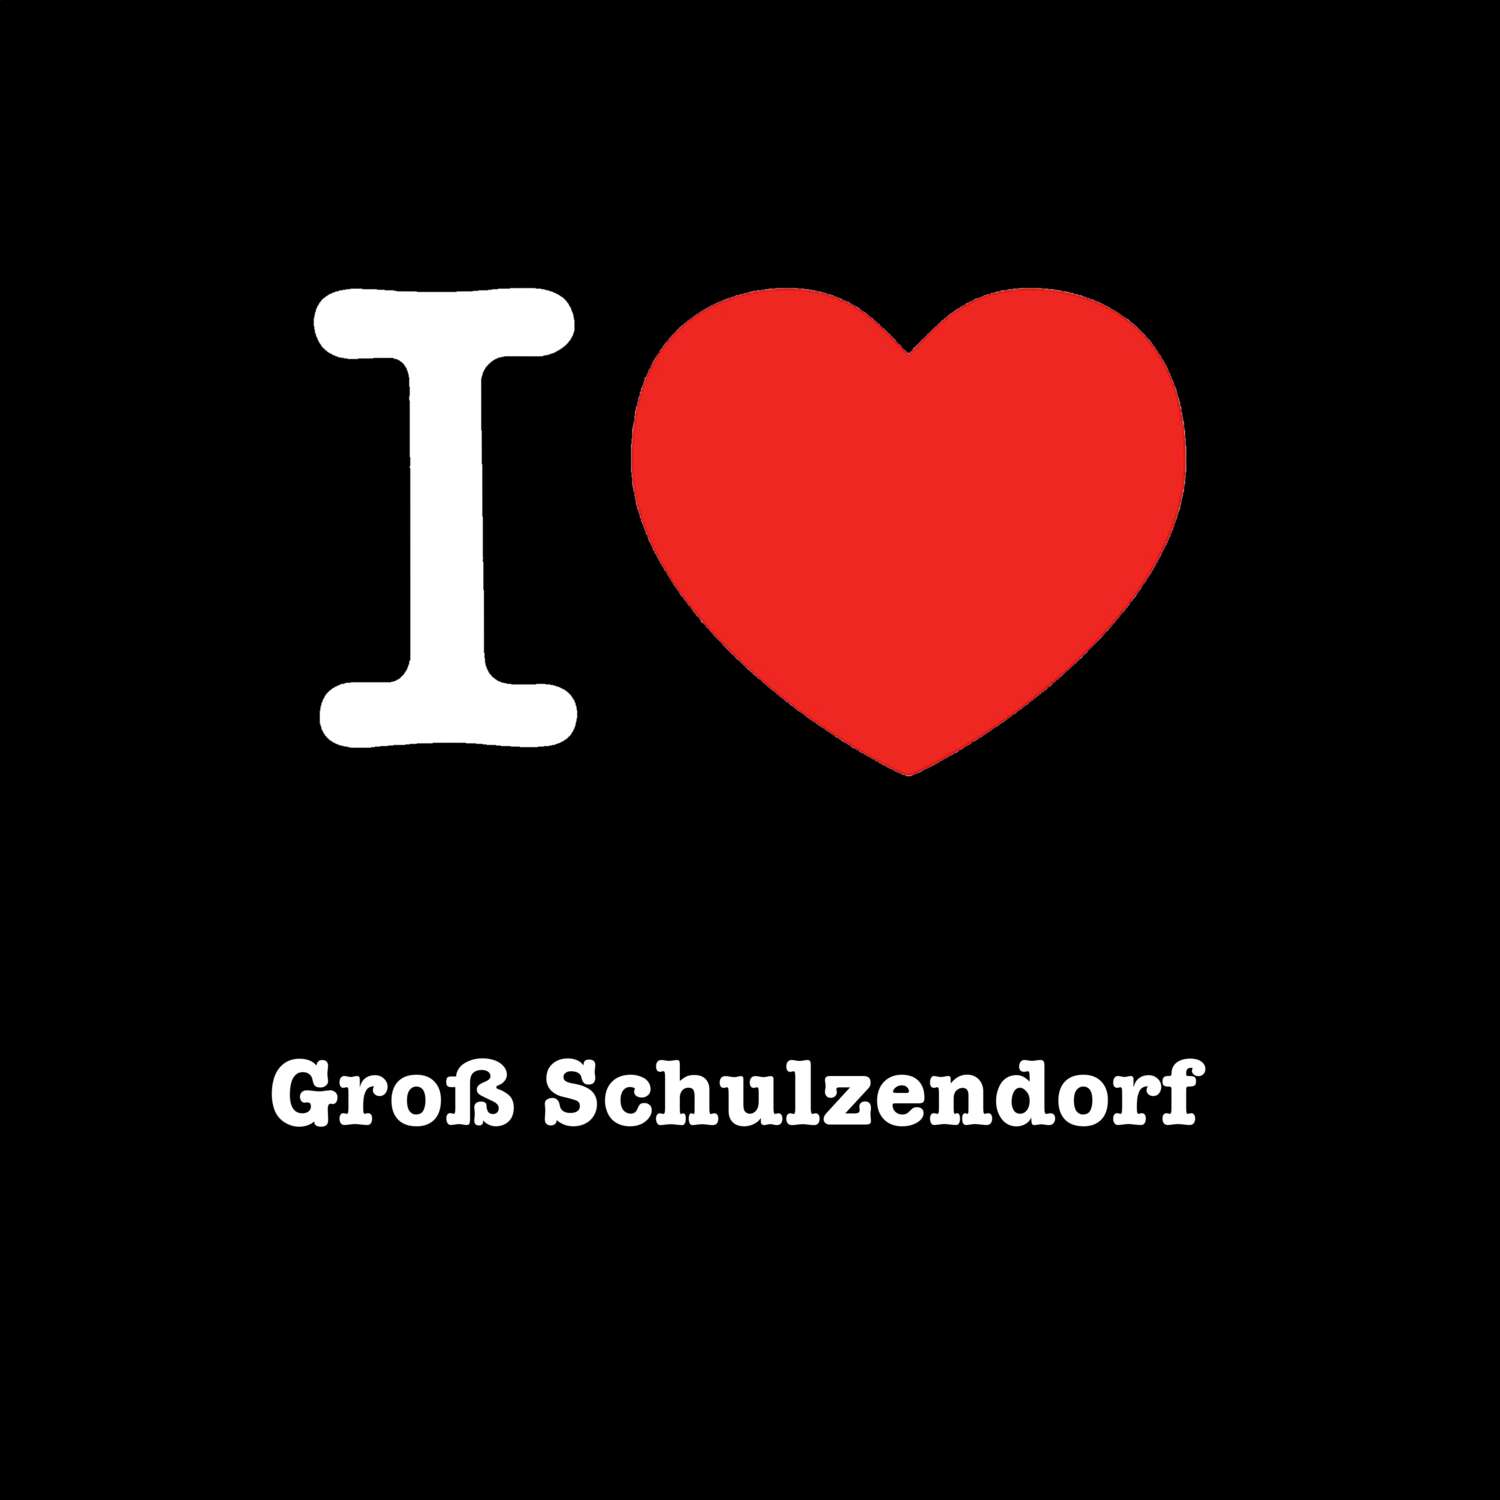 Groß Schulzendorf T-Shirt »I love«